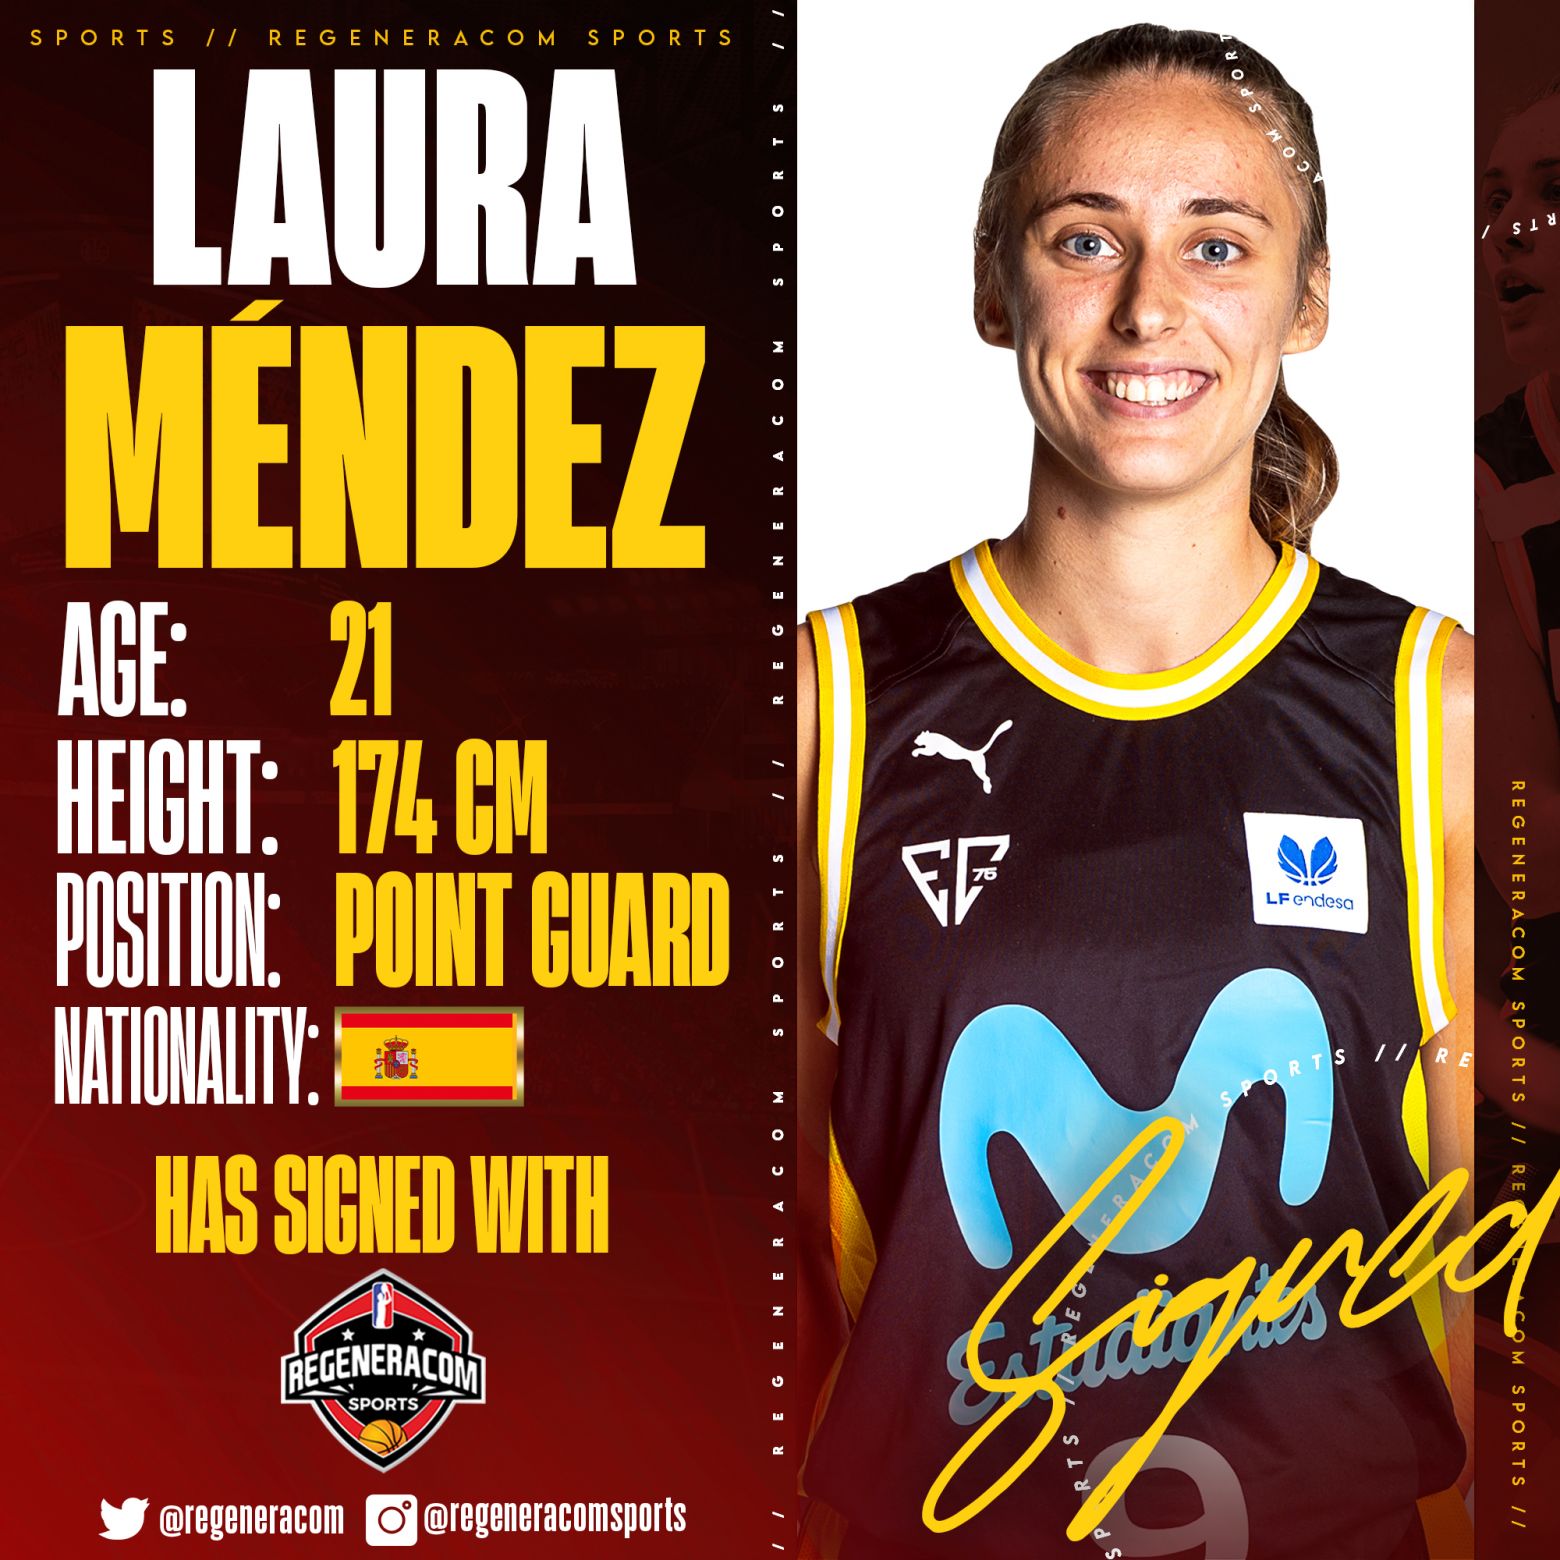 LAURA MÉNDEZ has signed with Regeneracom Sports